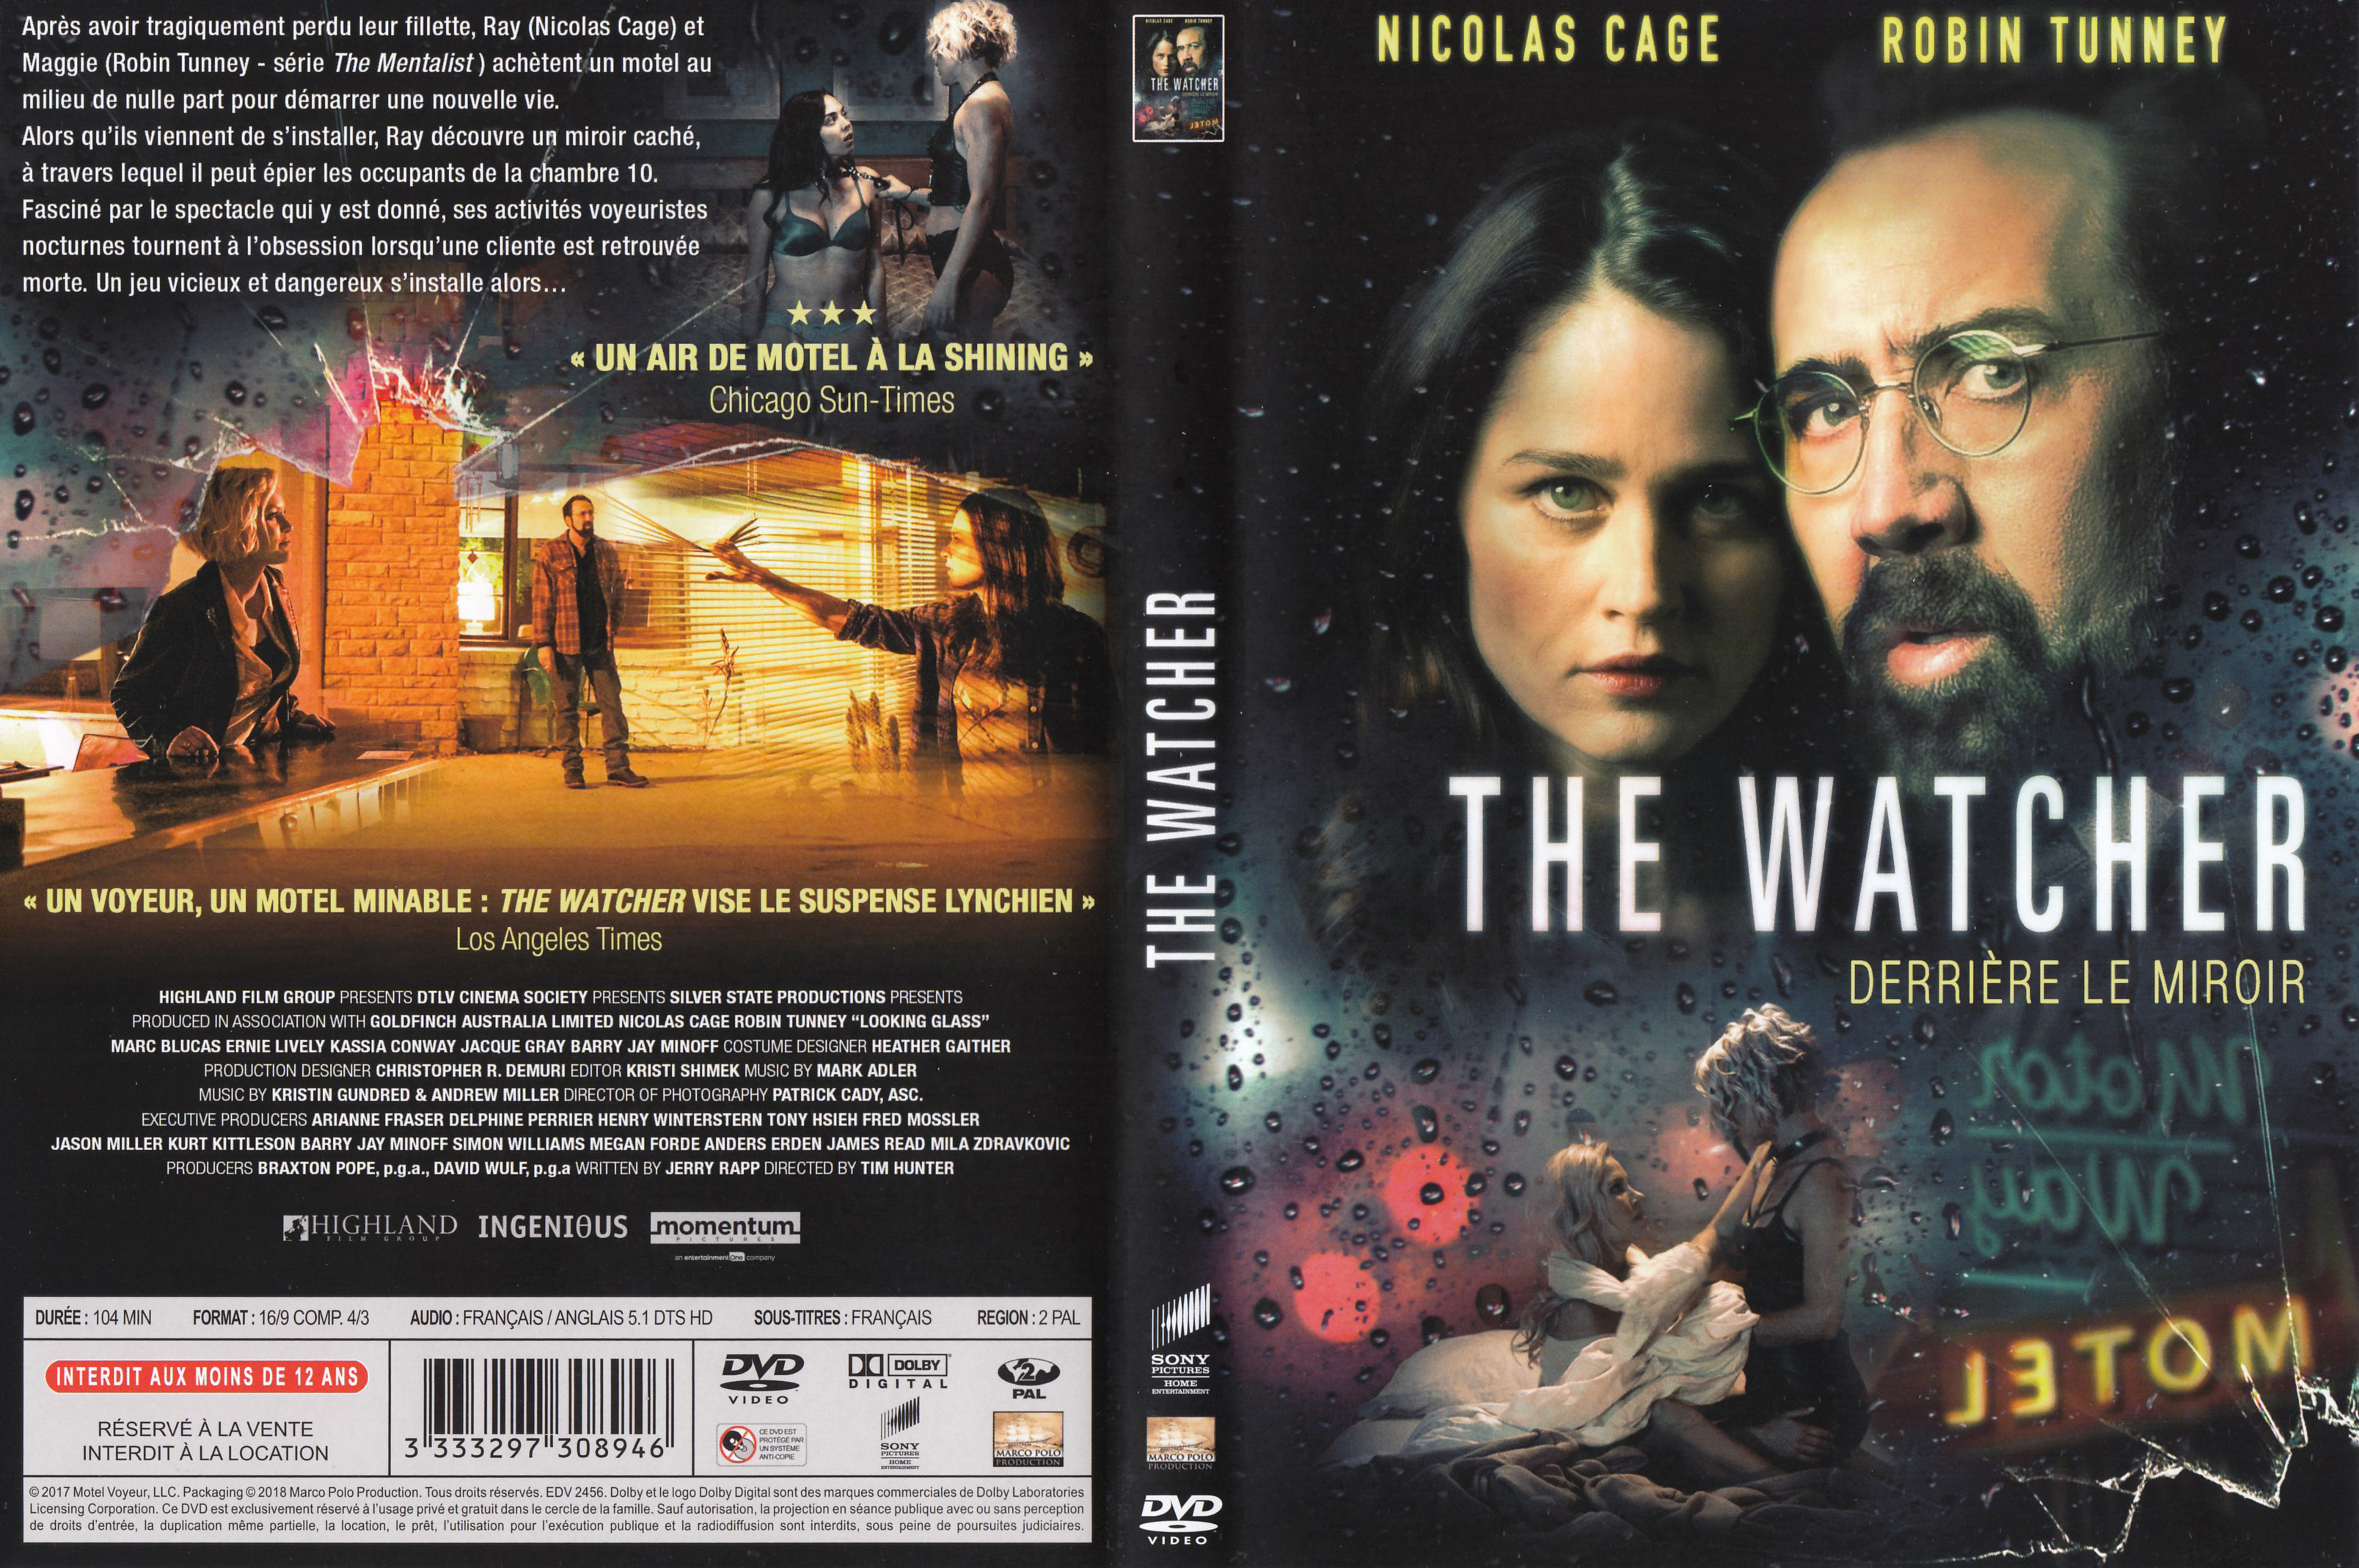 Jaquette DVD The watcher (2018)